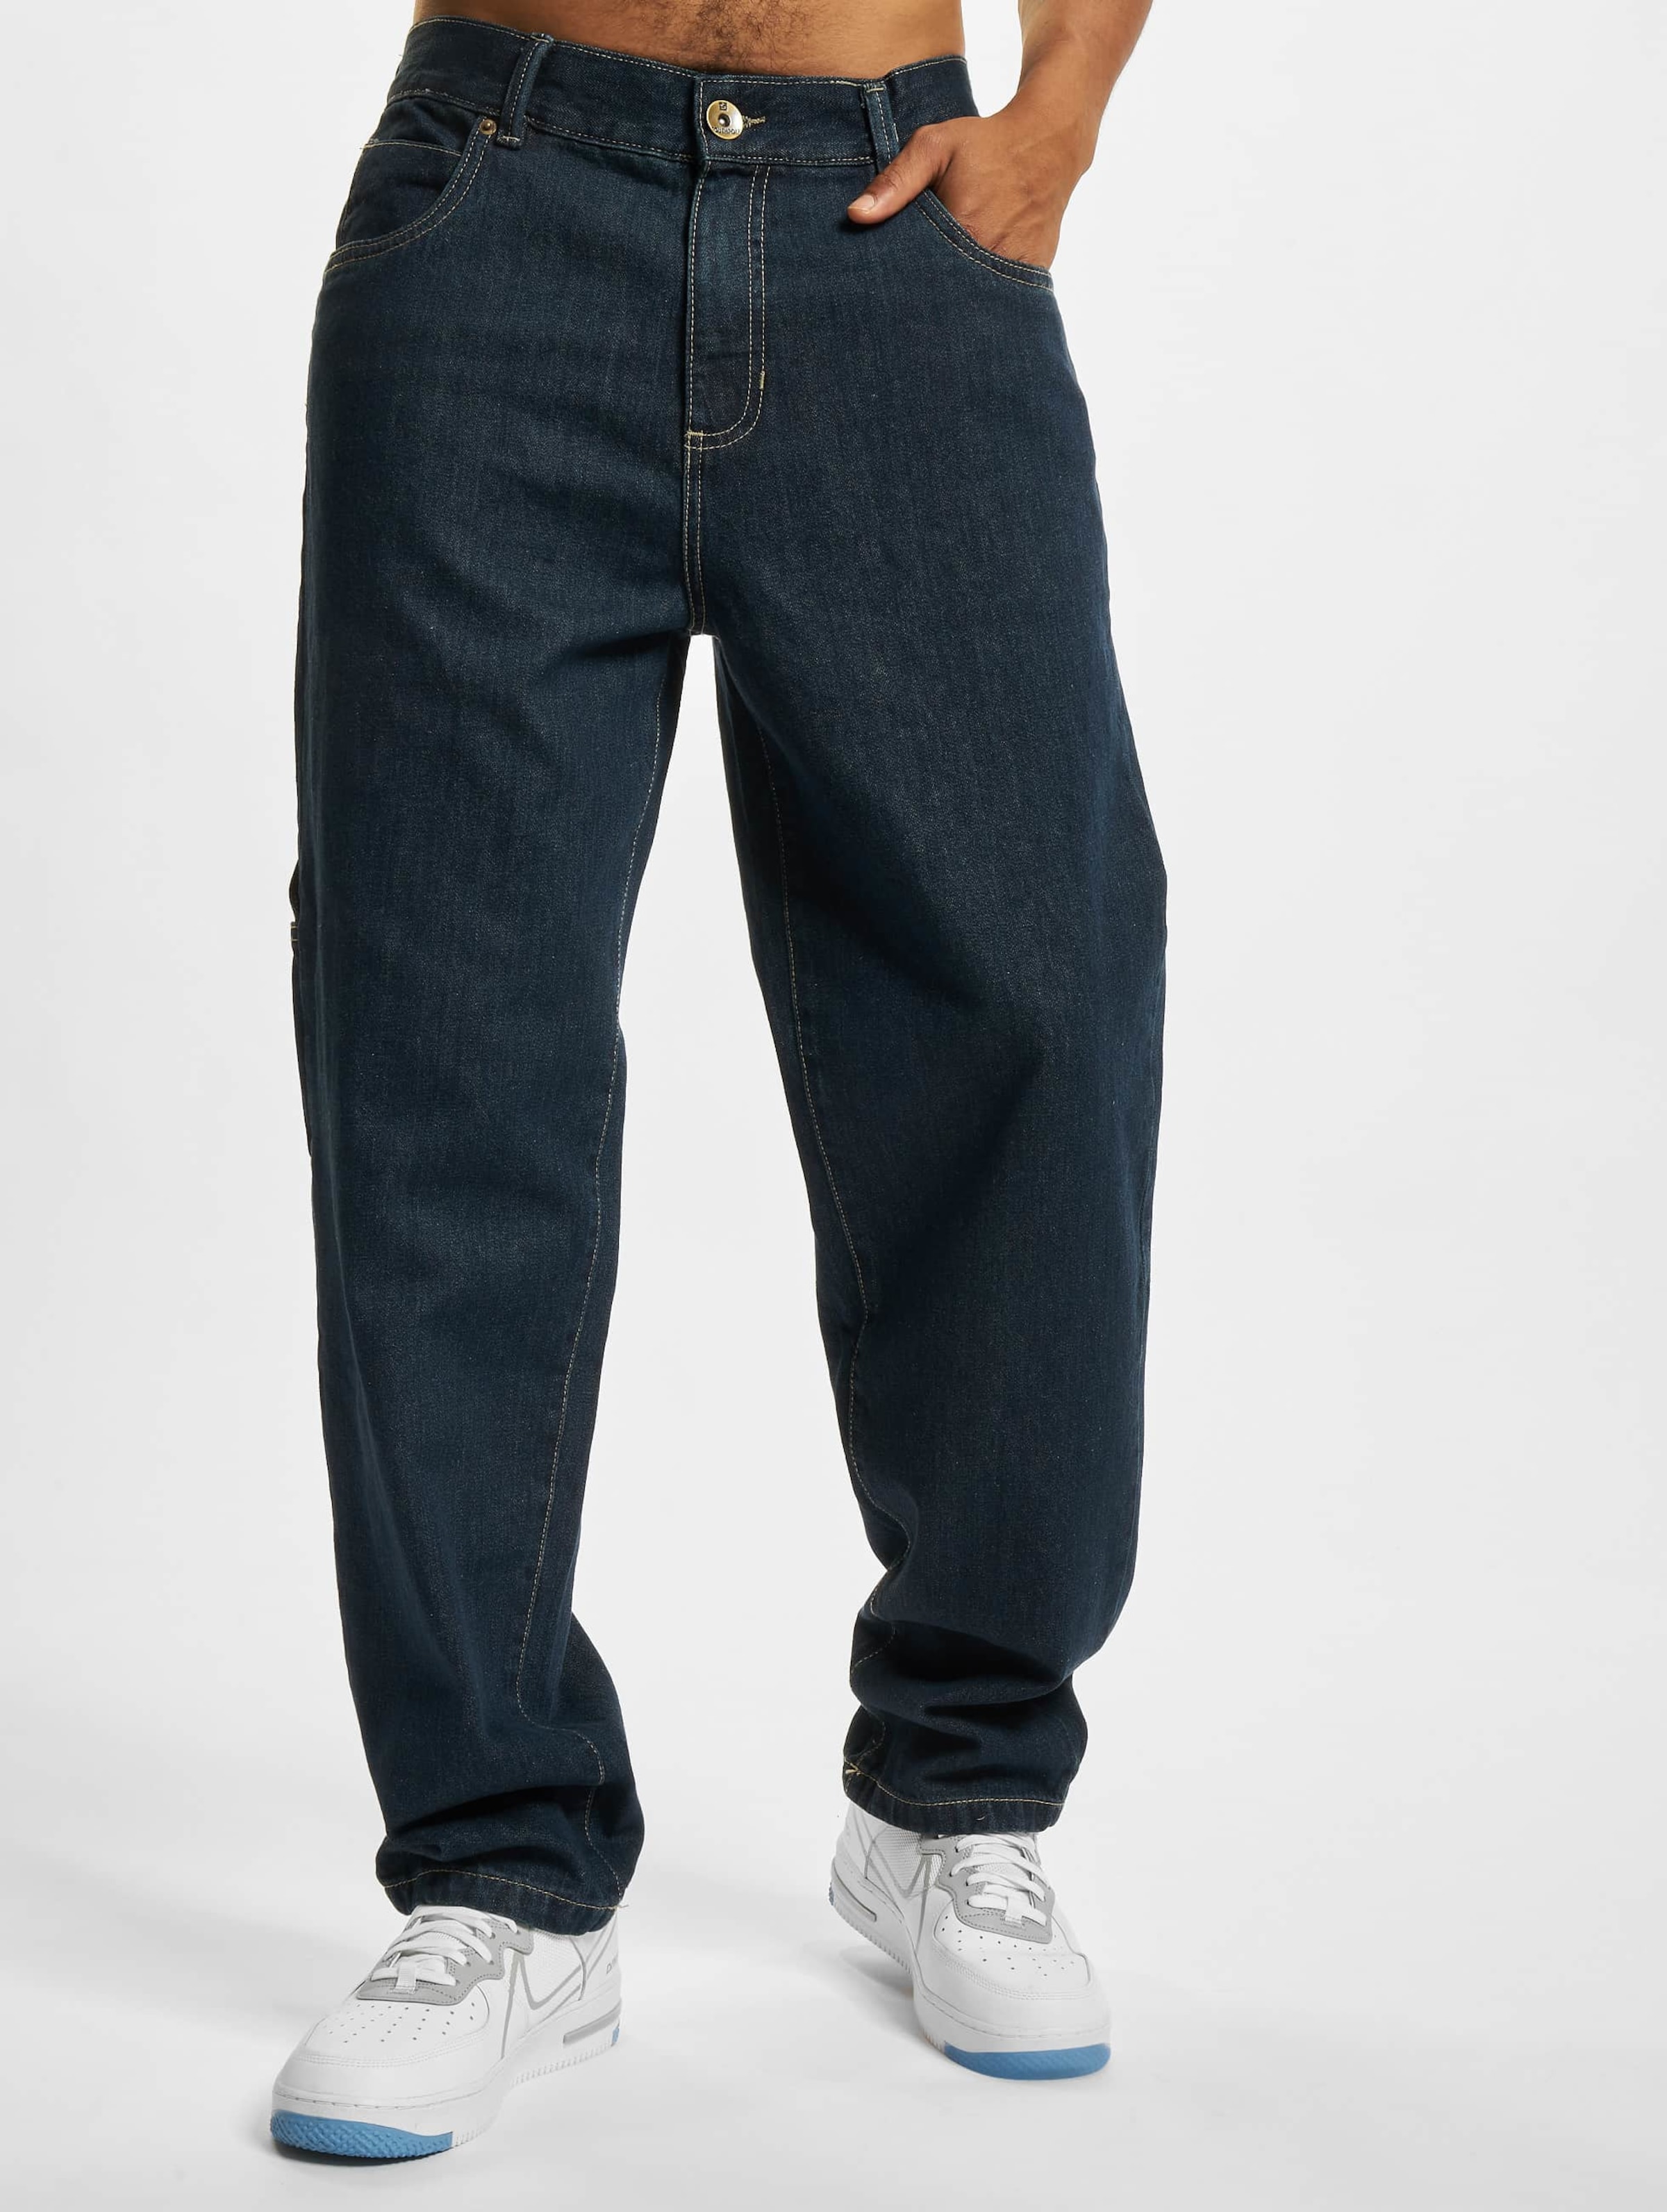 Southpole 4180 Dark Blue Denim Jeans Size 36x30 EUC | Dark blue denim jeans,  Denim jeans, Jeans size